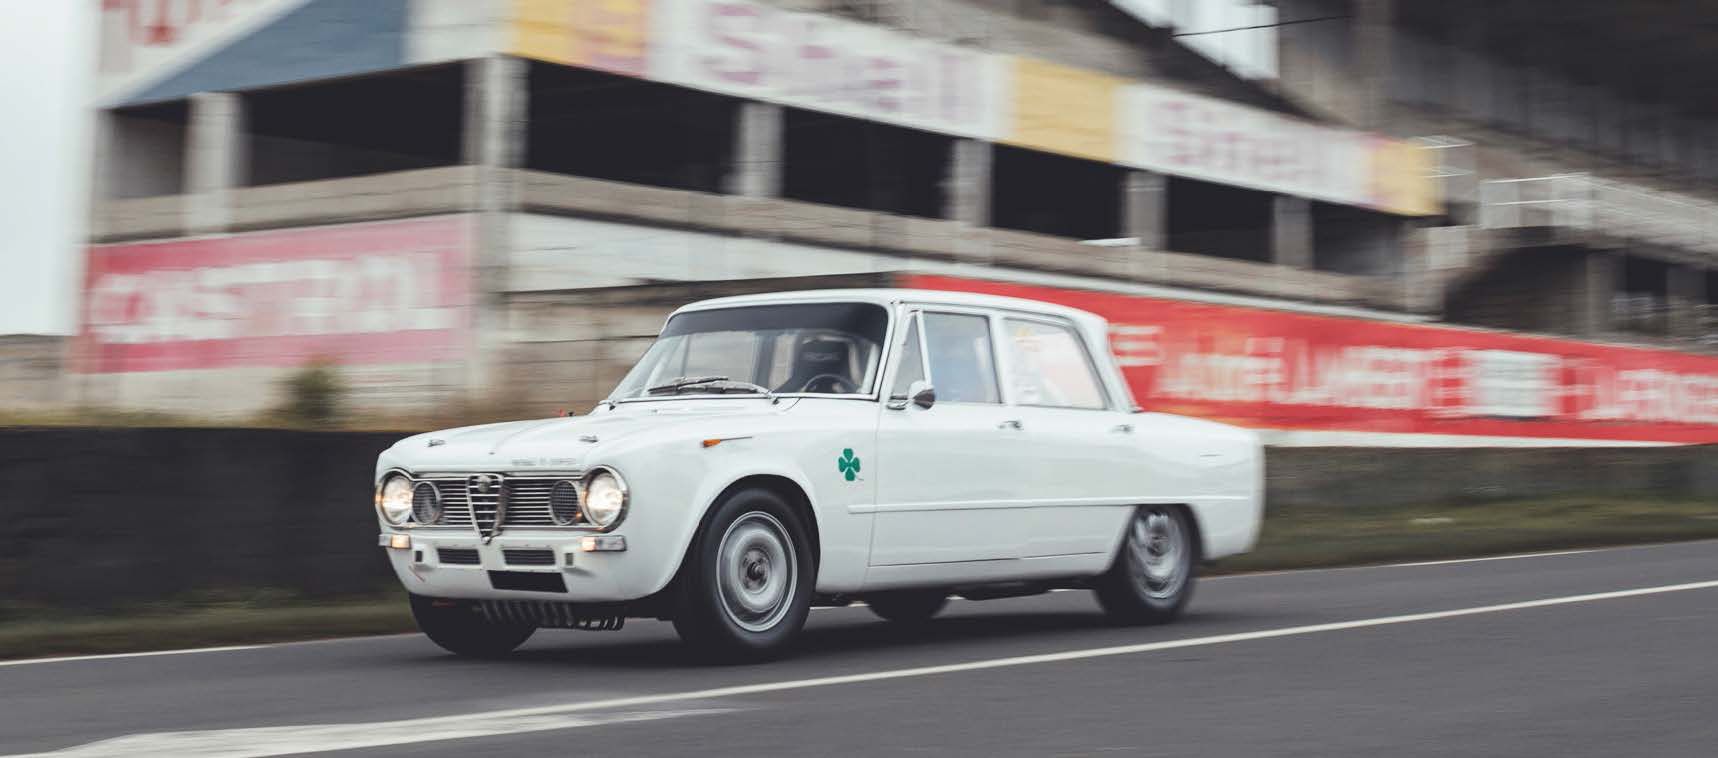 1964 ALFA ROMEO GIULIA 1600 TI SUPER 
没有技术控制而出售的车辆



只建造了501个

在法国新交付的罕见例子

高质量&hellip;